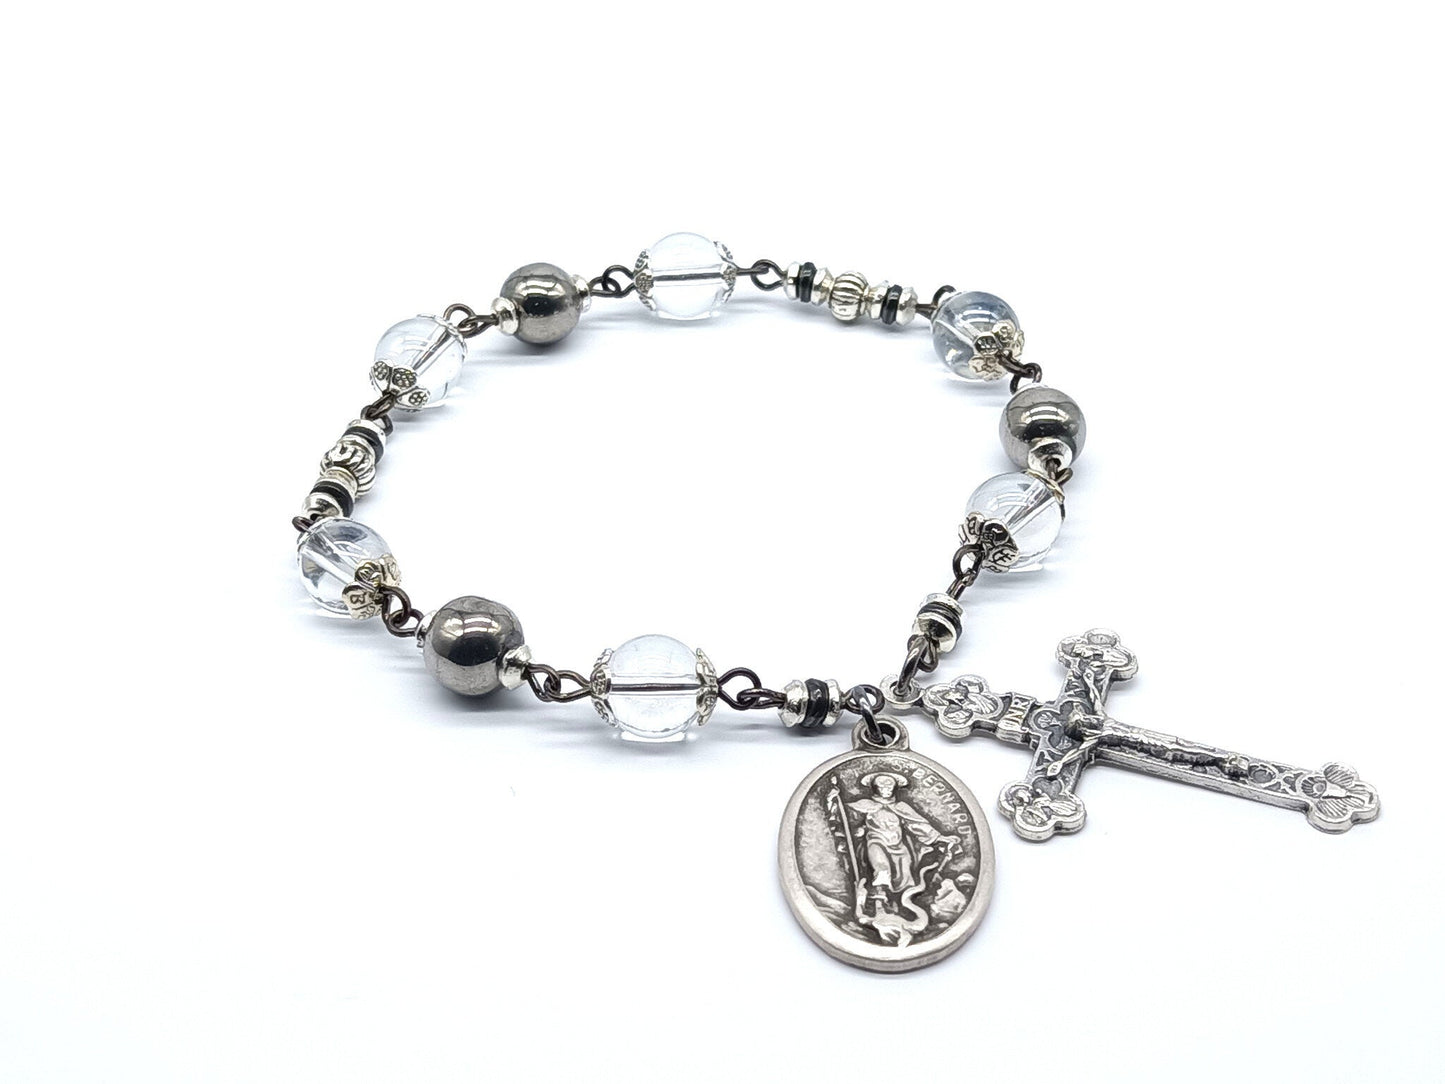 Saint Bernard unique rosary bead chaplet with glass beads, silver crucifix and St. Bernard medal.